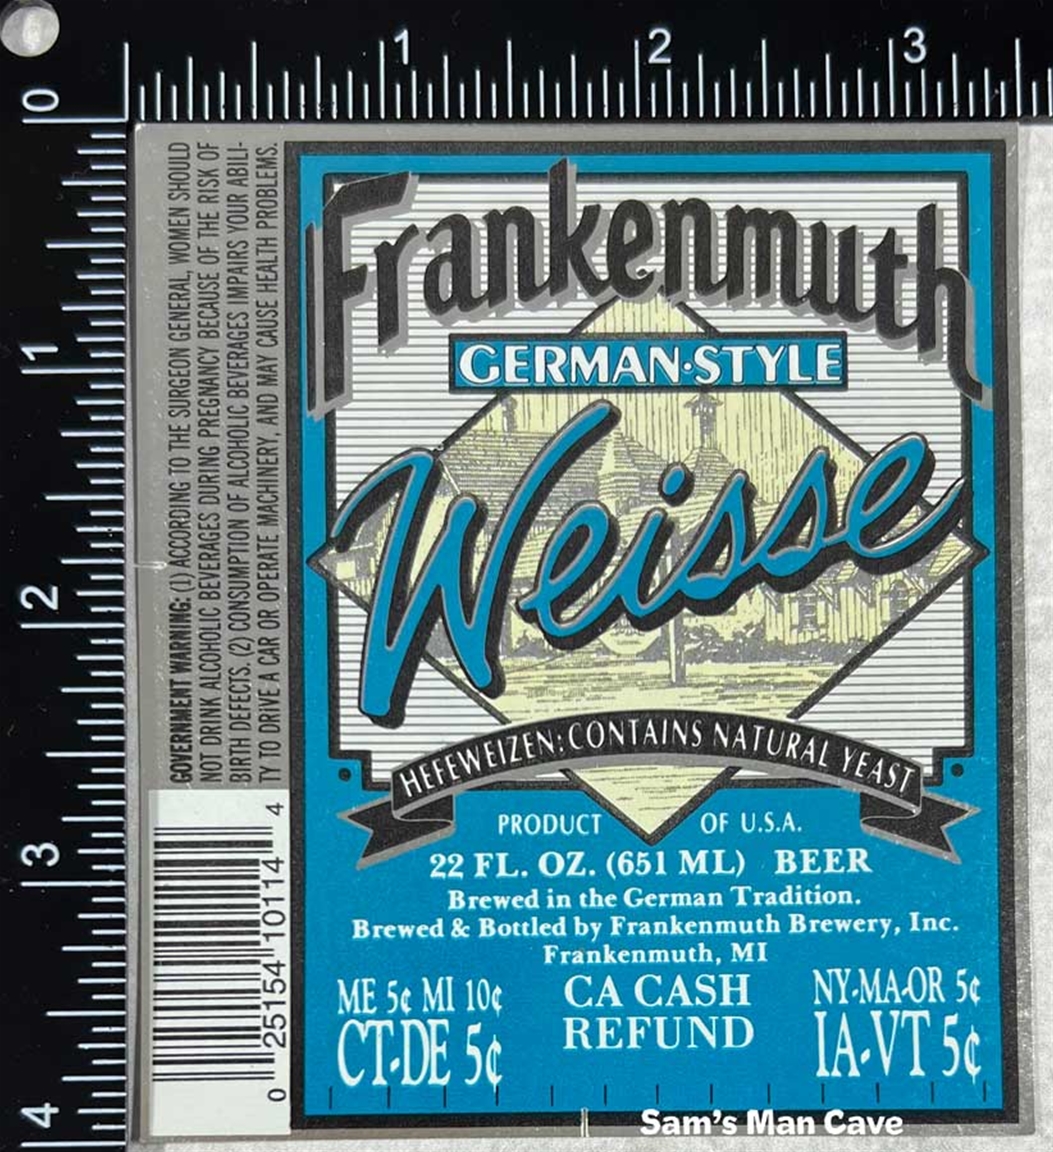 Frankenmuth Weisse Beer Label